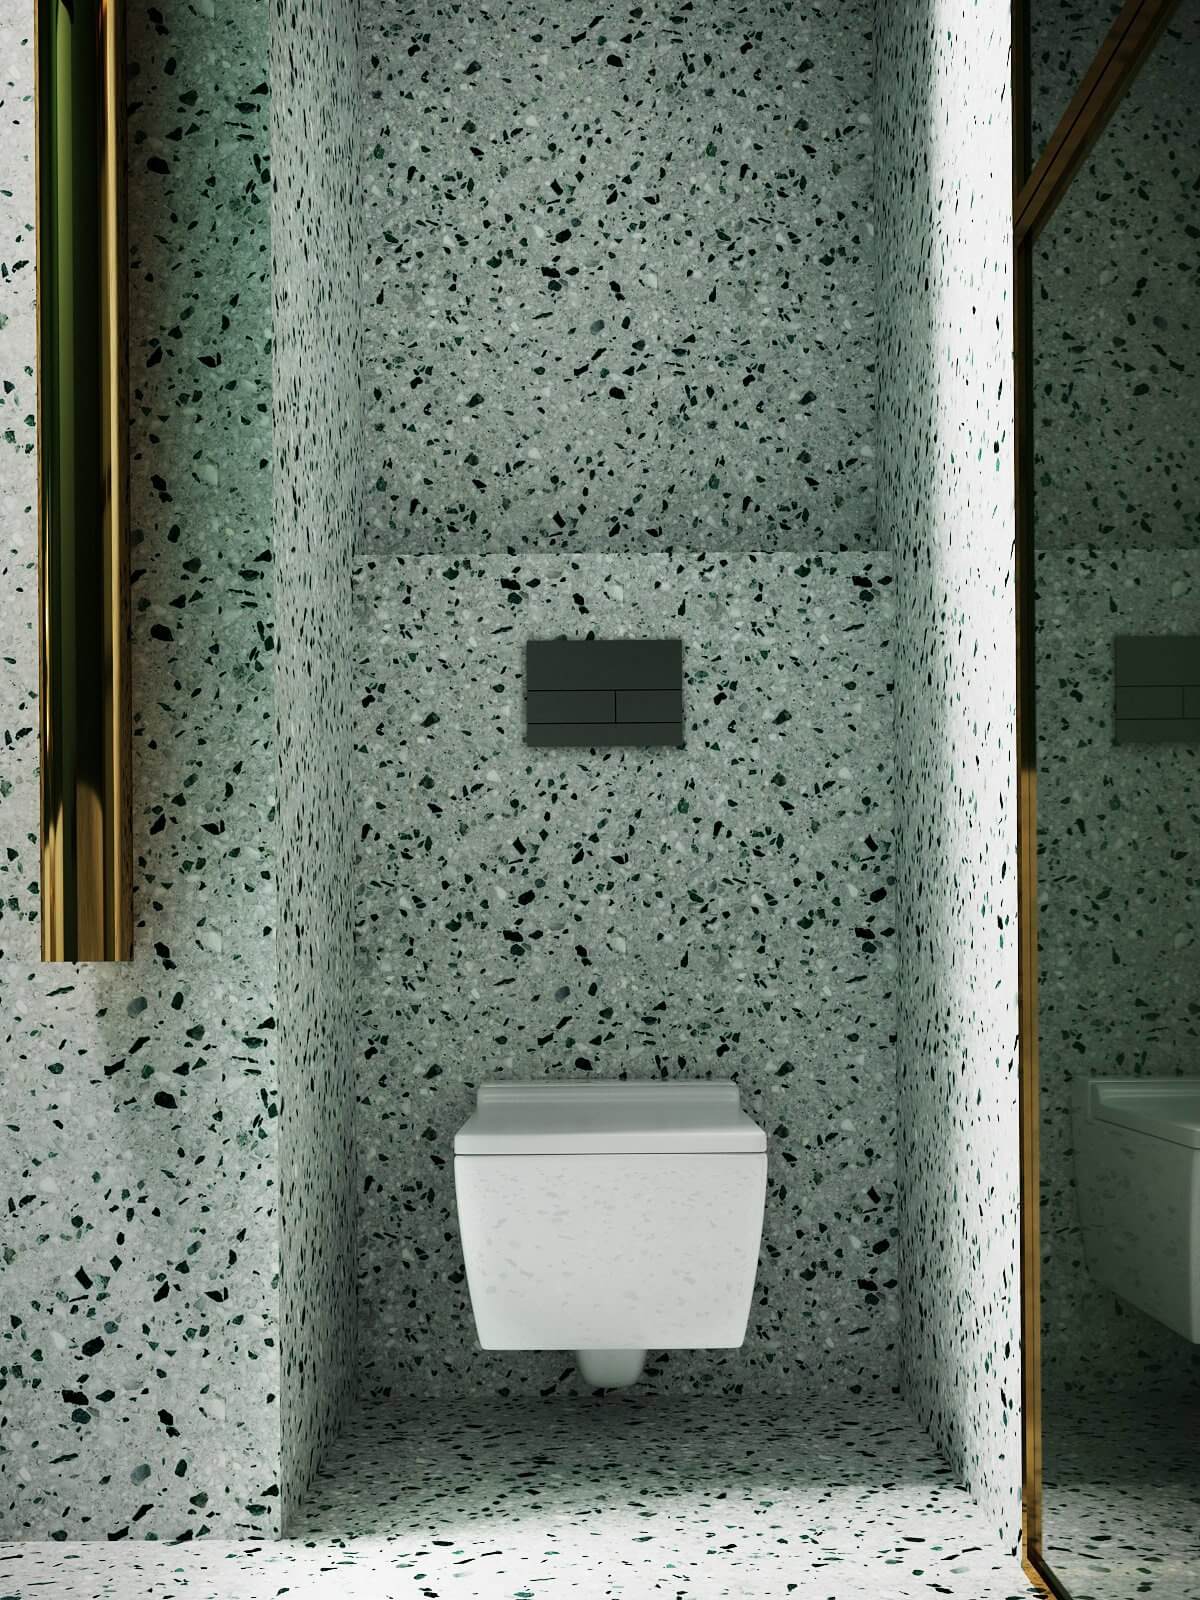 New York concept house bathroom wc - cgi visualization